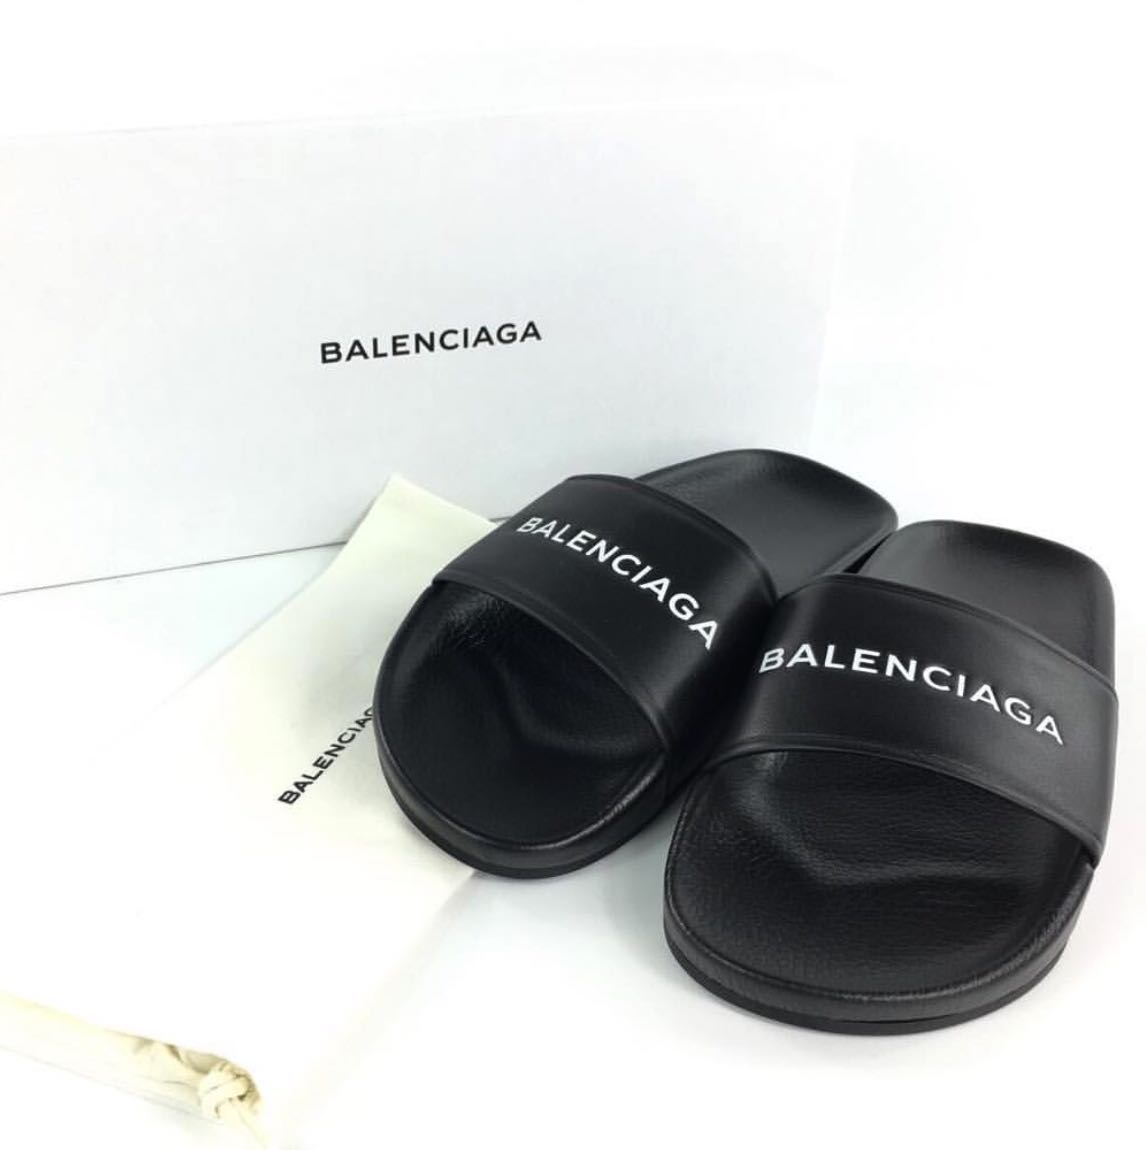 Balenciaga slipper [SALE], Women's 